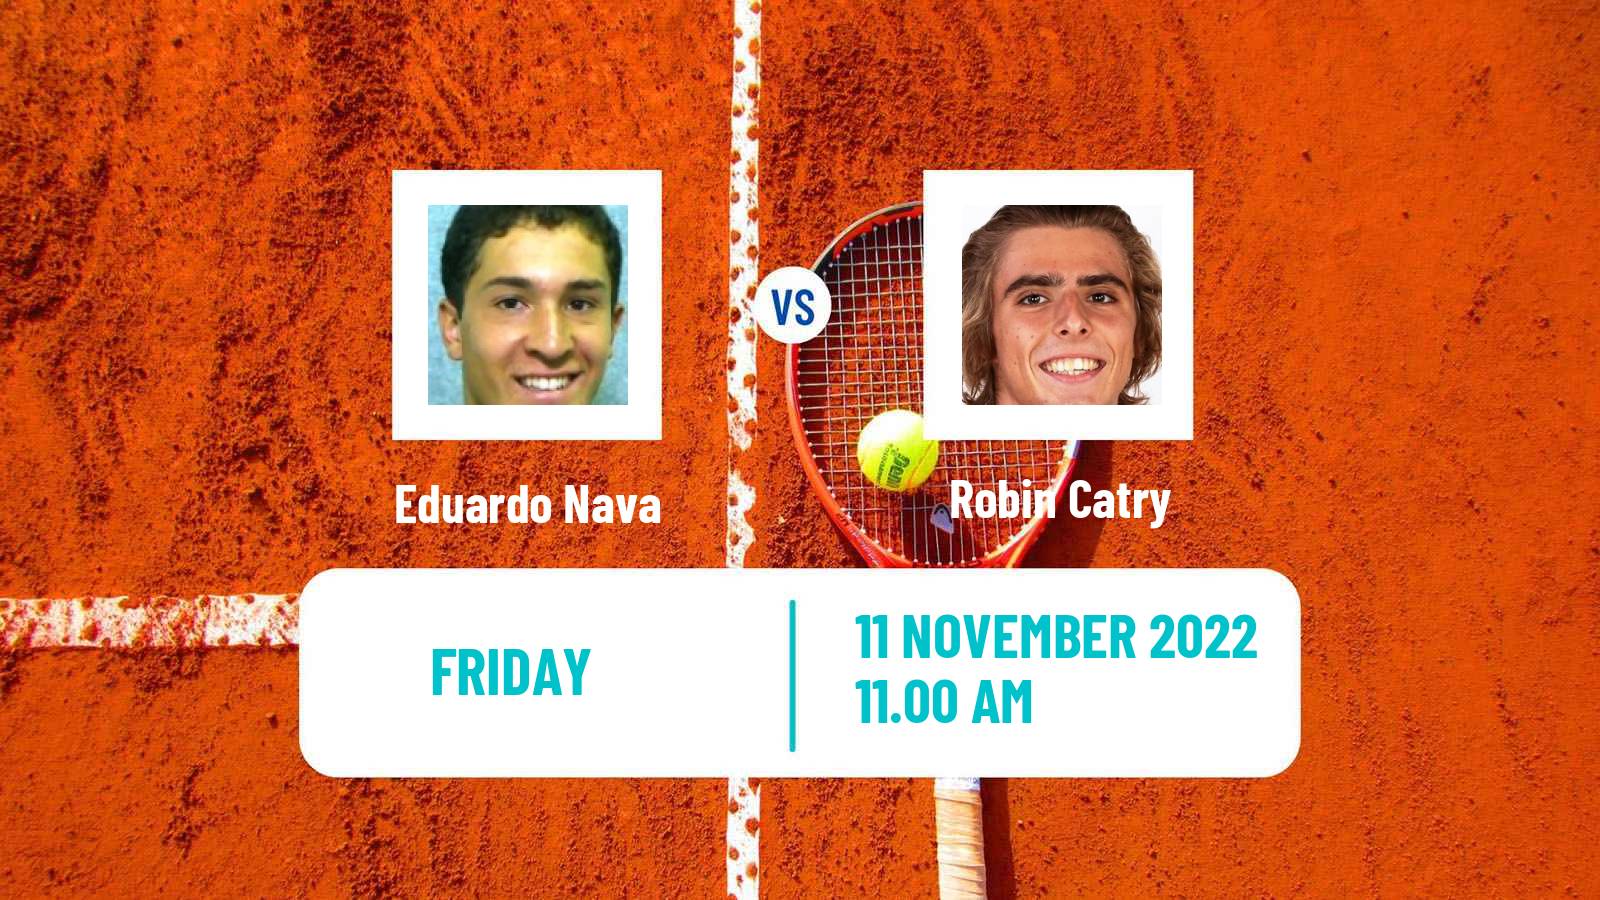 Tennis ITF Tournaments Eduardo Nava - Robin Catry